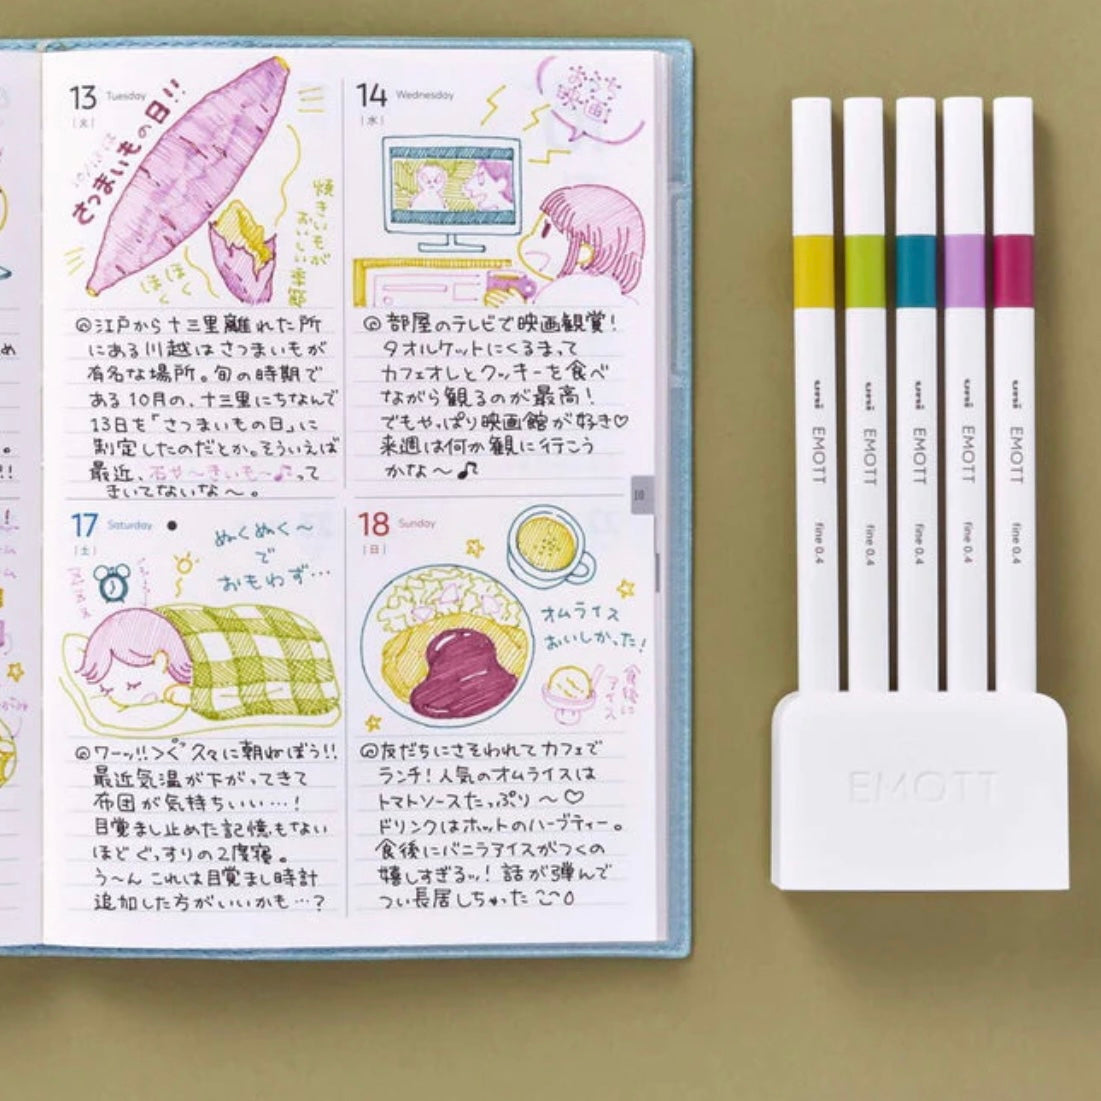 Emott 5 Color Fineliner Marker Set - No.11 Midnight Color - niconeco zakkaya